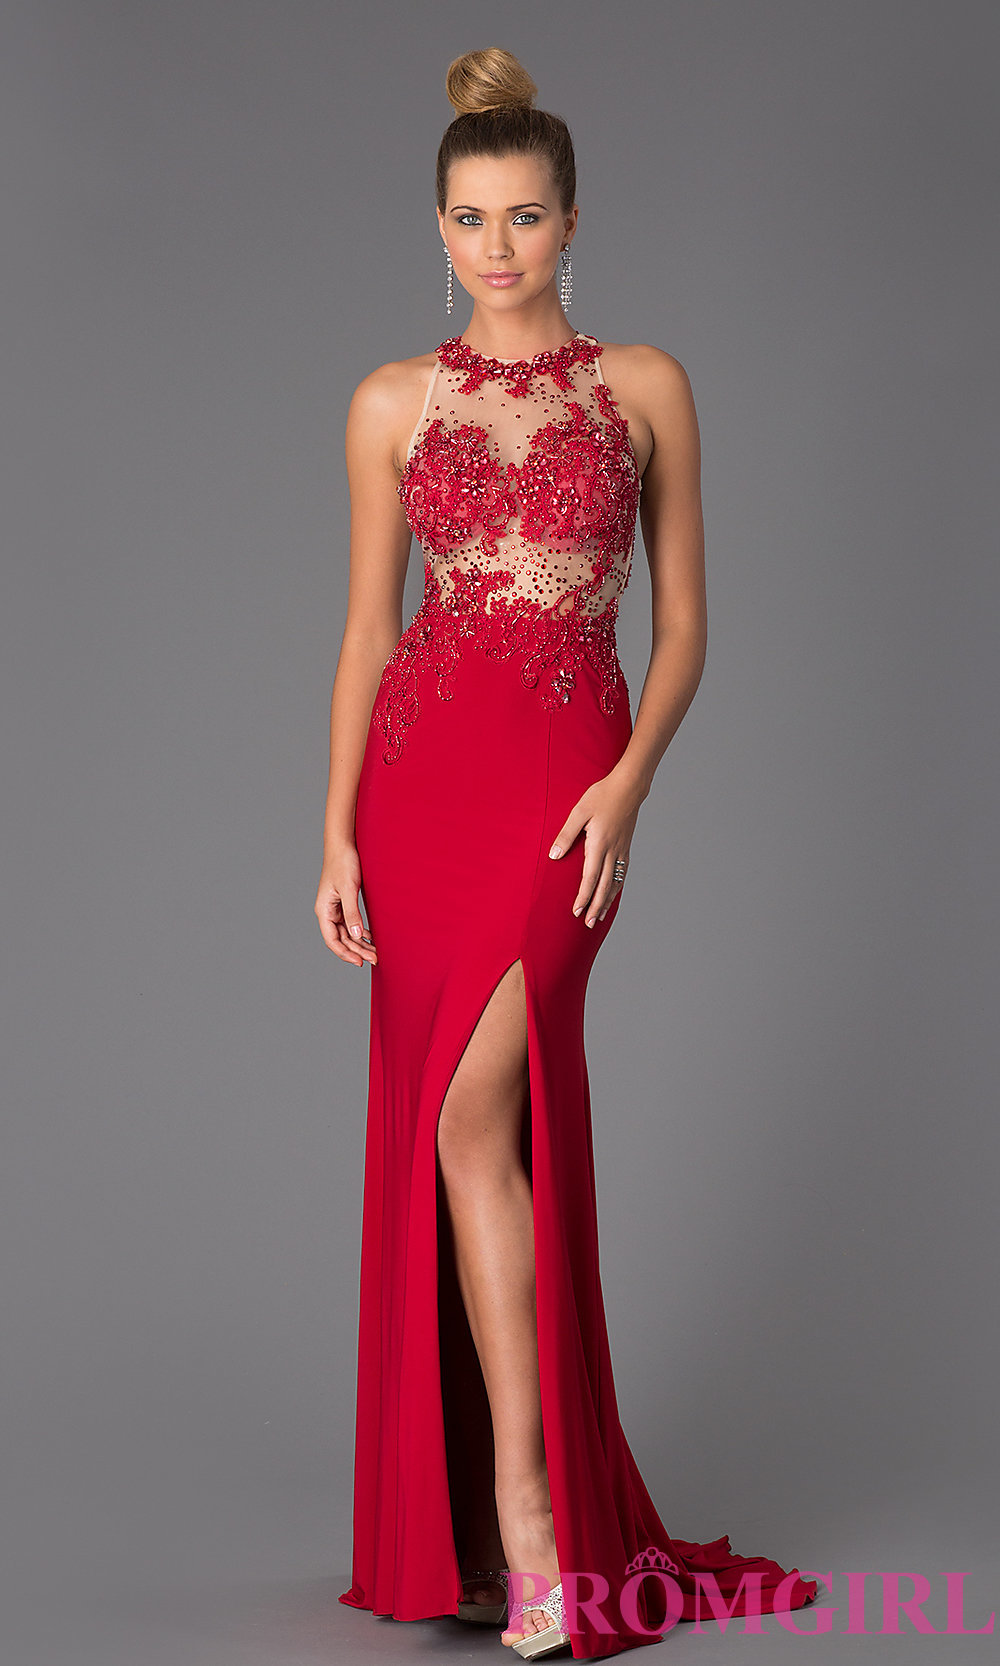 Red Dress Sleeveless & A Wonderful Start - Dresses Ask